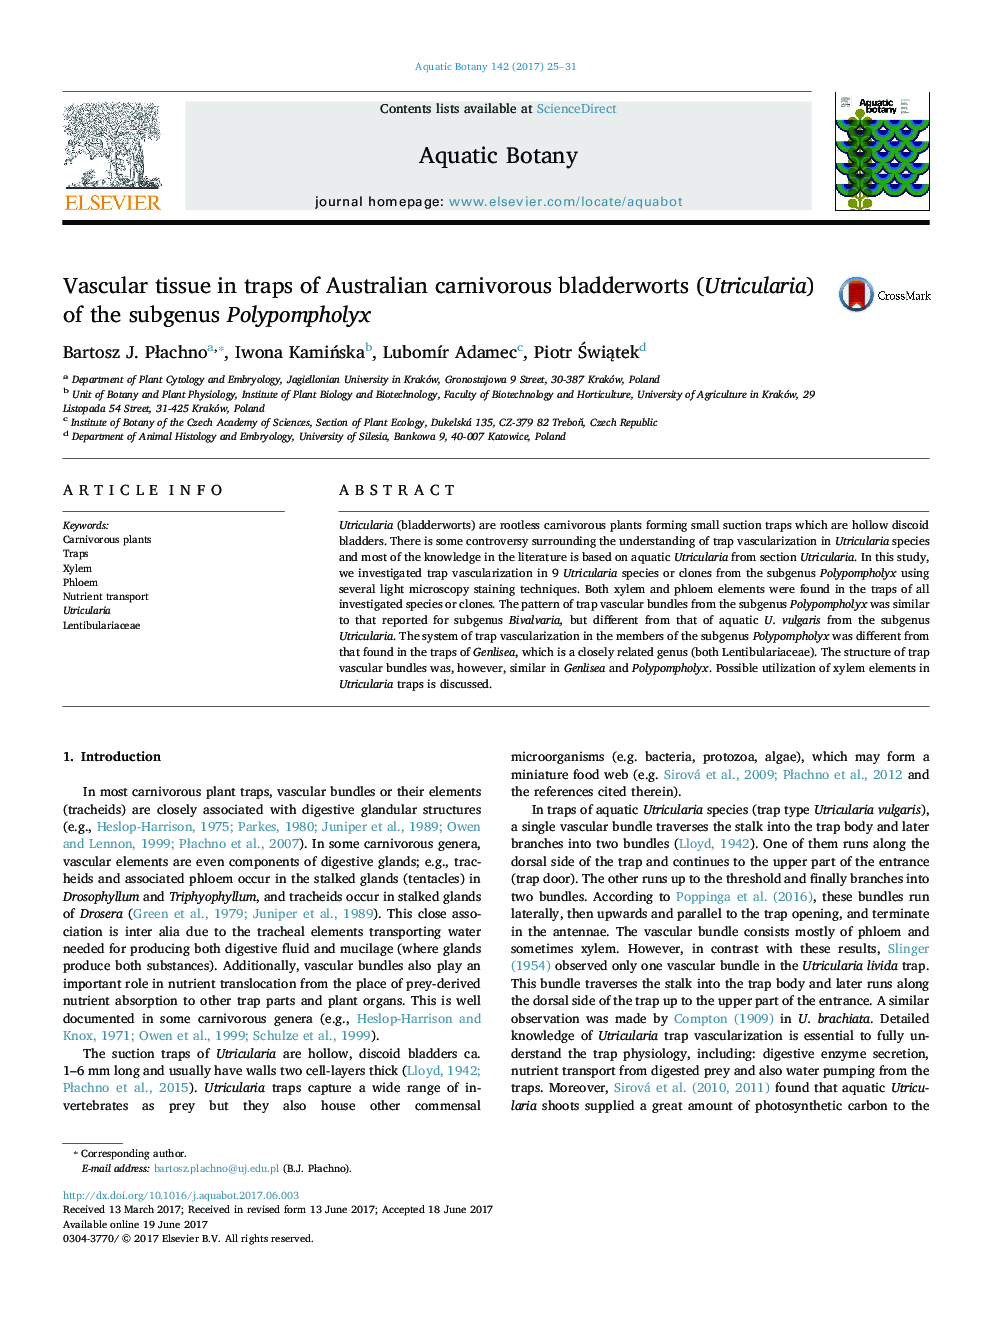 Vascular tissue in traps of Australian carnivorous bladderworts (Utricularia) of the subgenus Polypompholyx